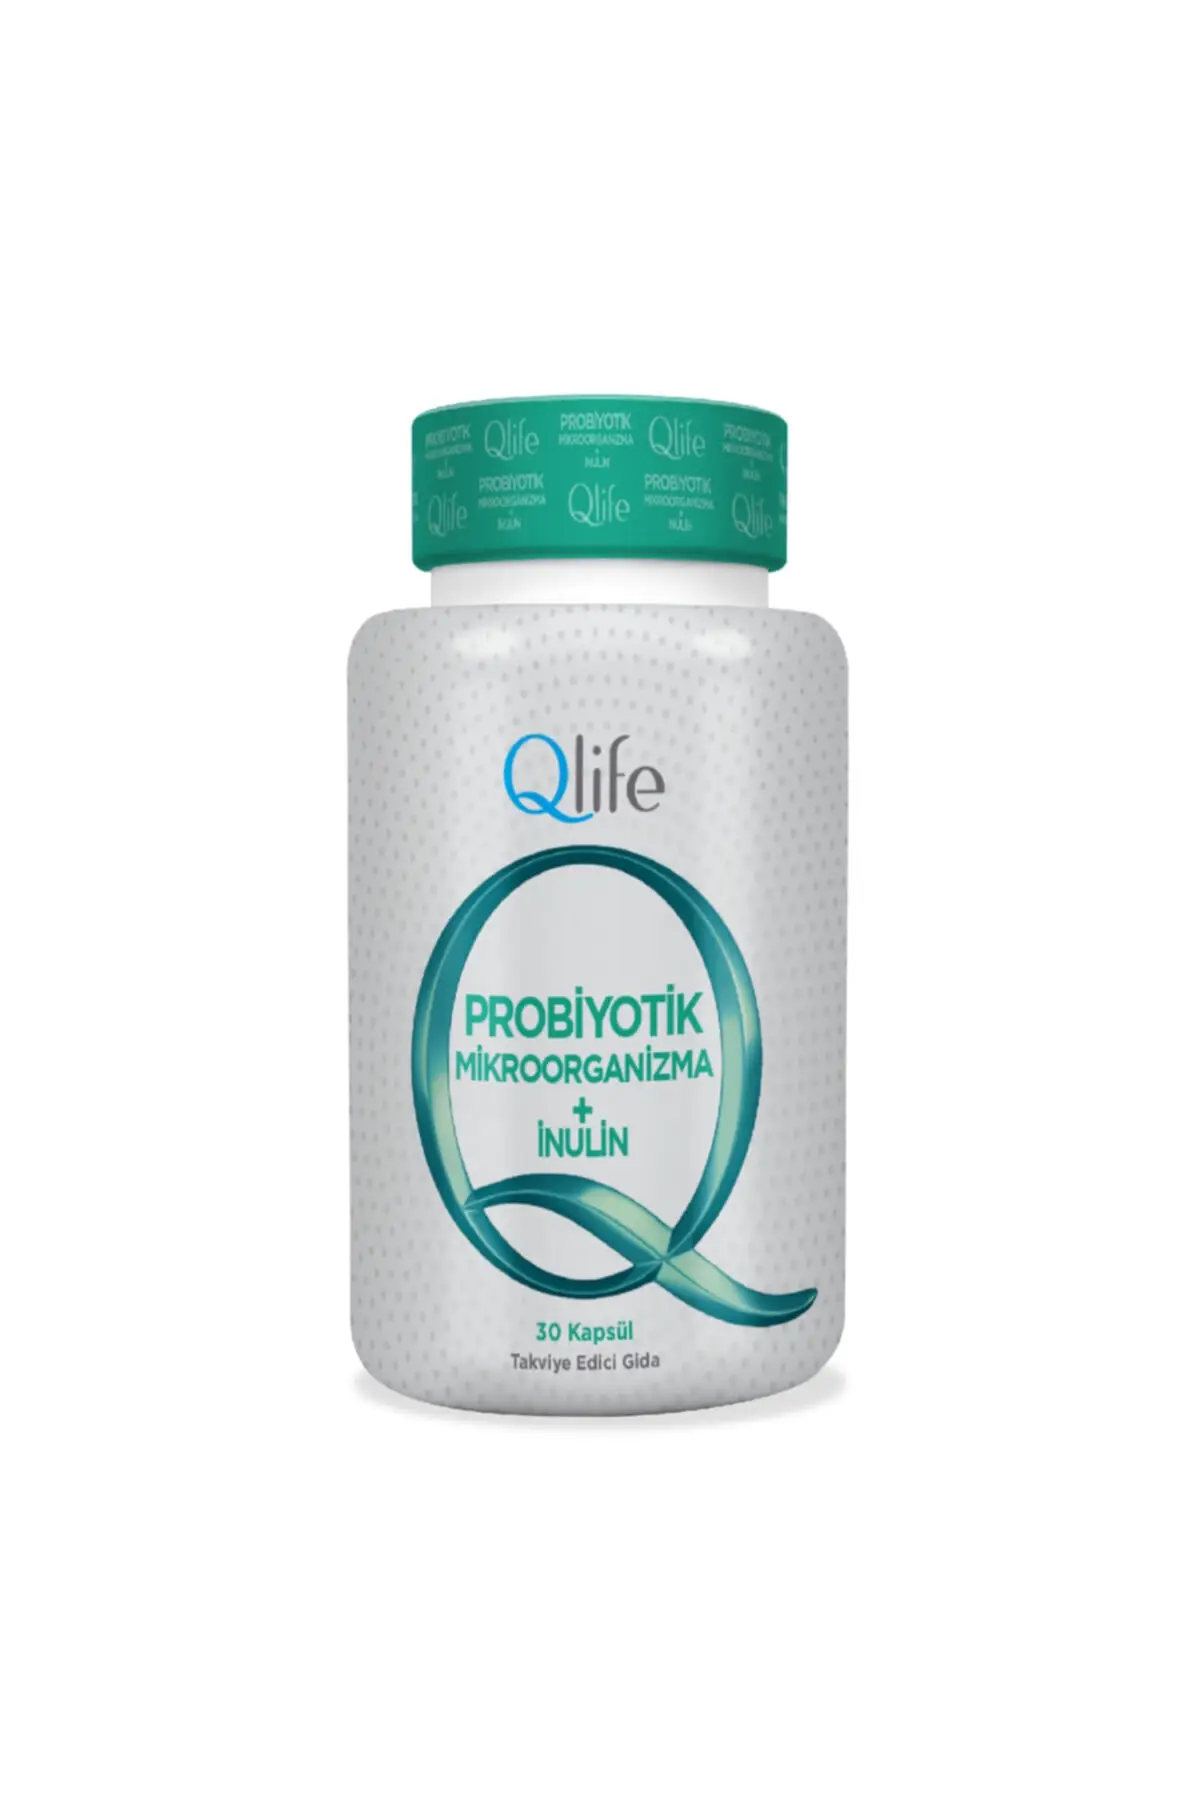 Qlife Probiyotik Microorganizma + Inulin 30 Capsules probiyotik fiber chemical colorants digestive regulate new